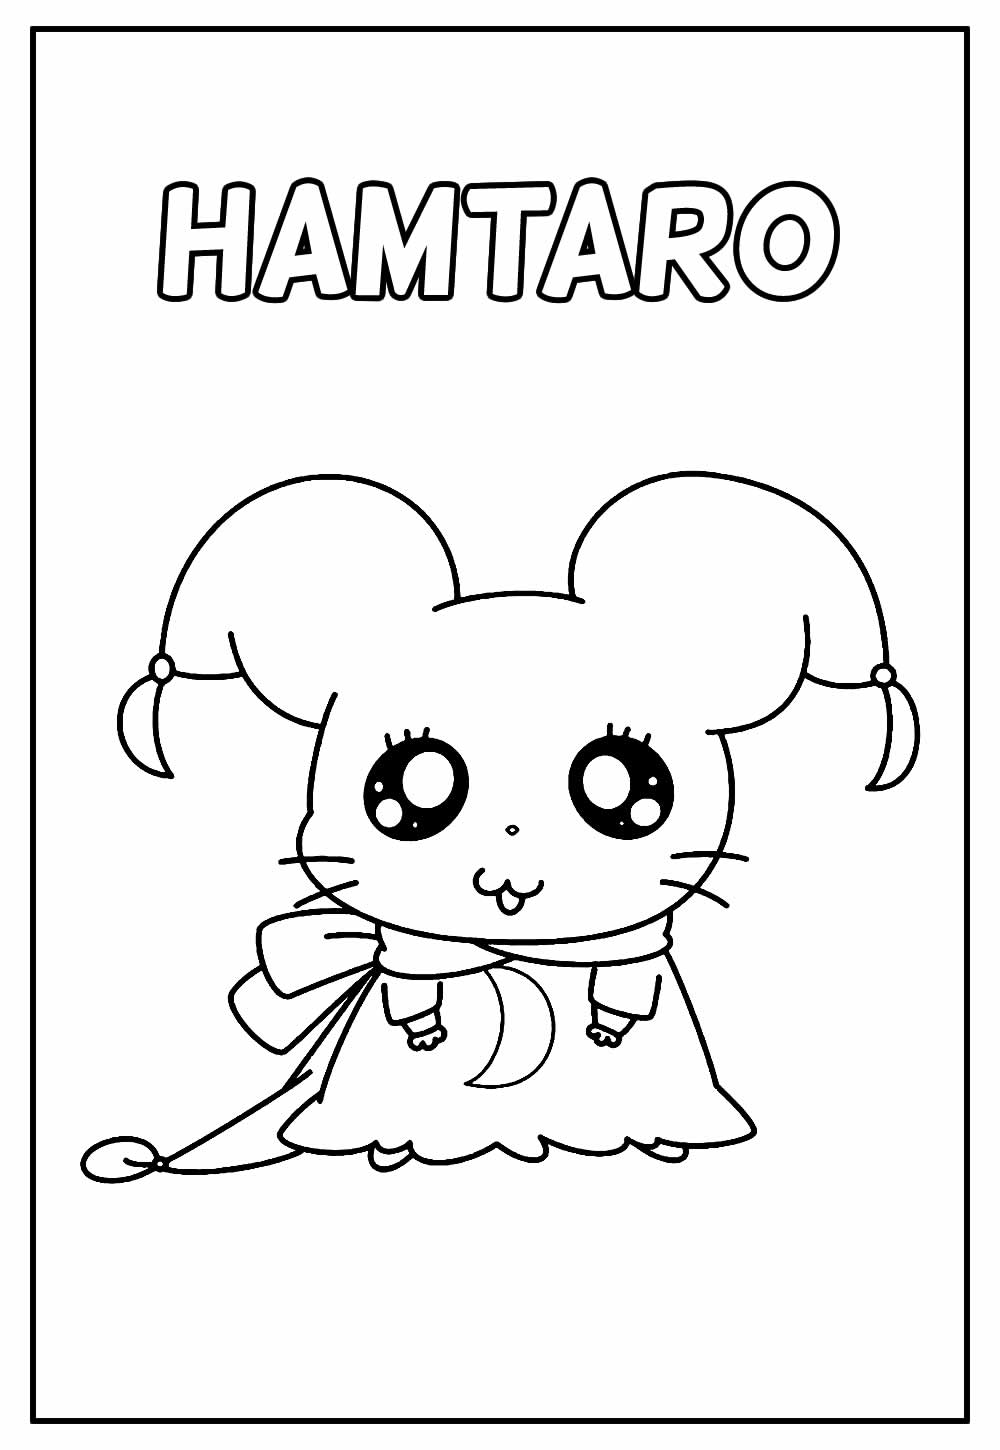 Desenho Educativo do Hamtaro para colorir